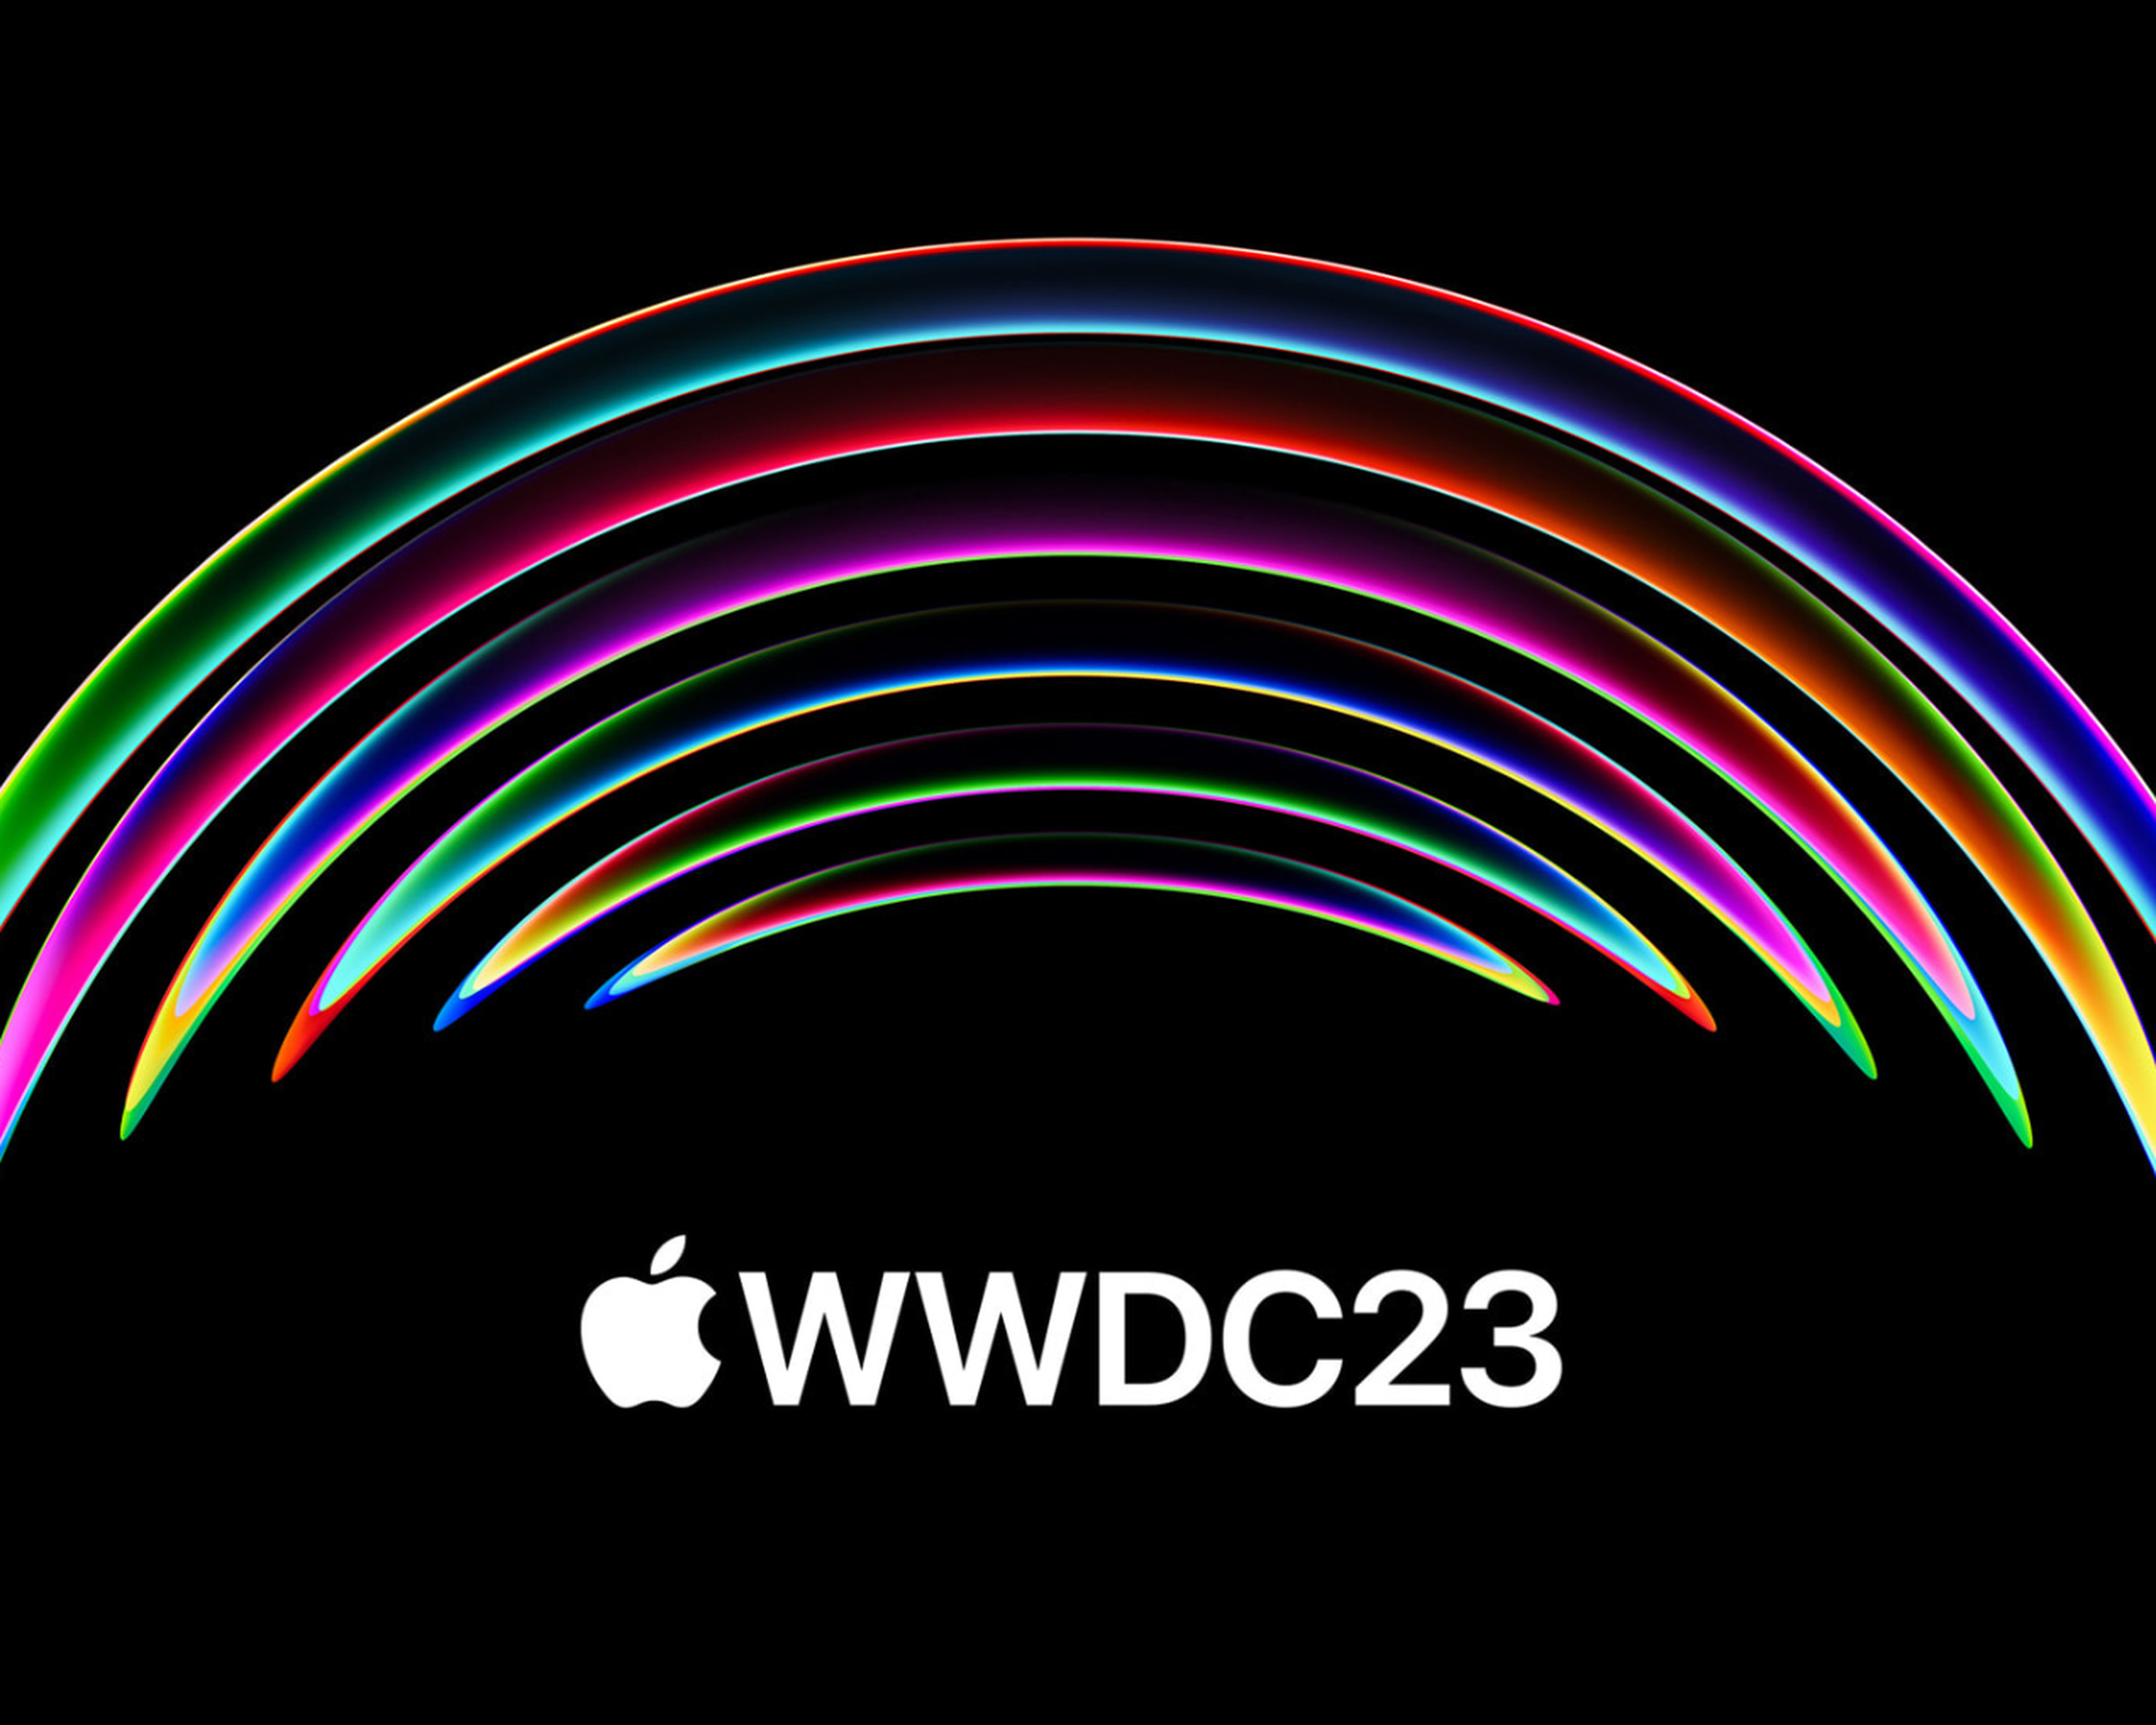 Illustration of Apple’s WWDC23 event